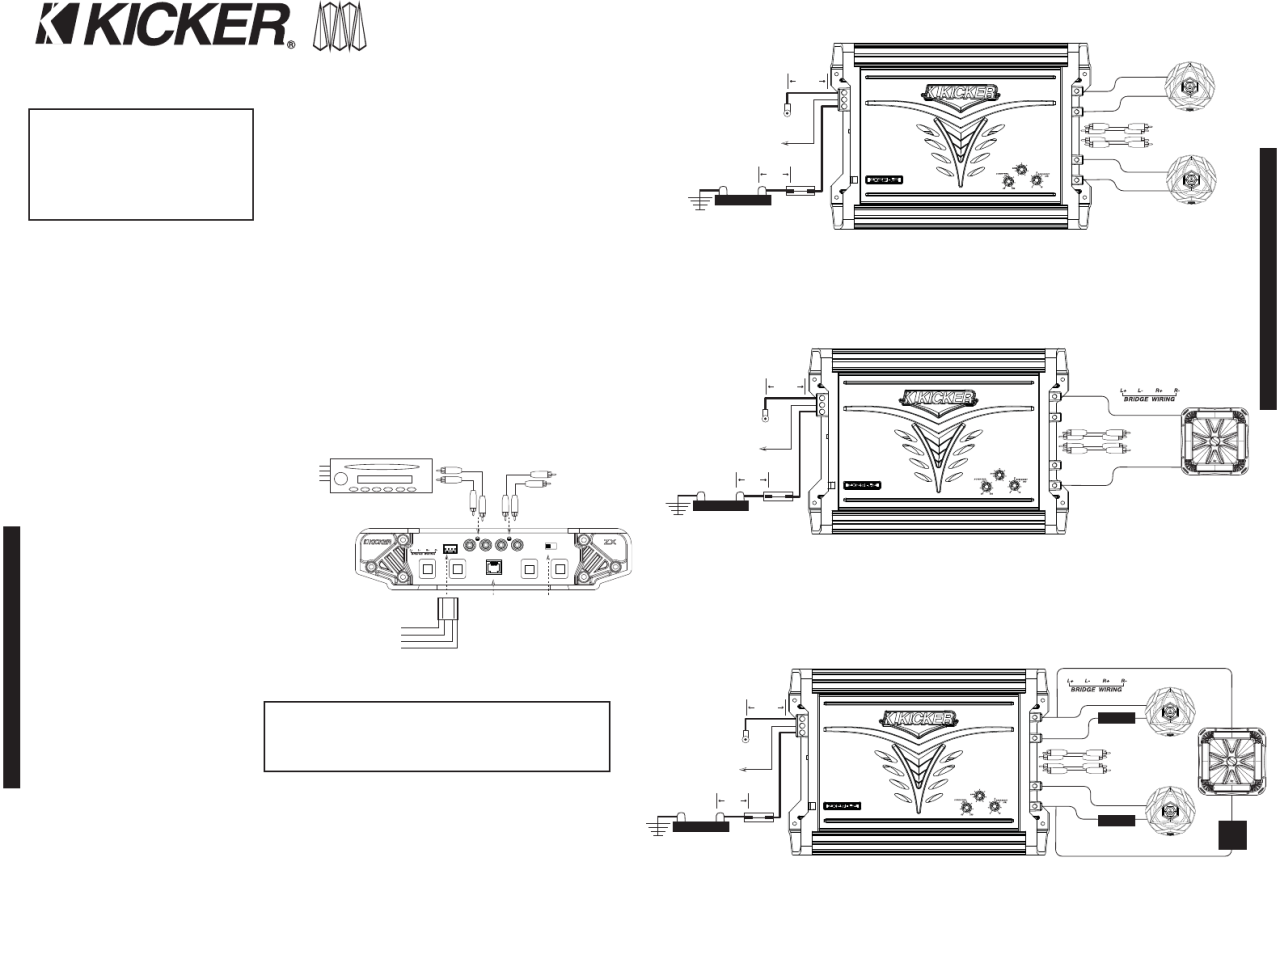 Kicker Cxa1800.1 Wiring Diagram